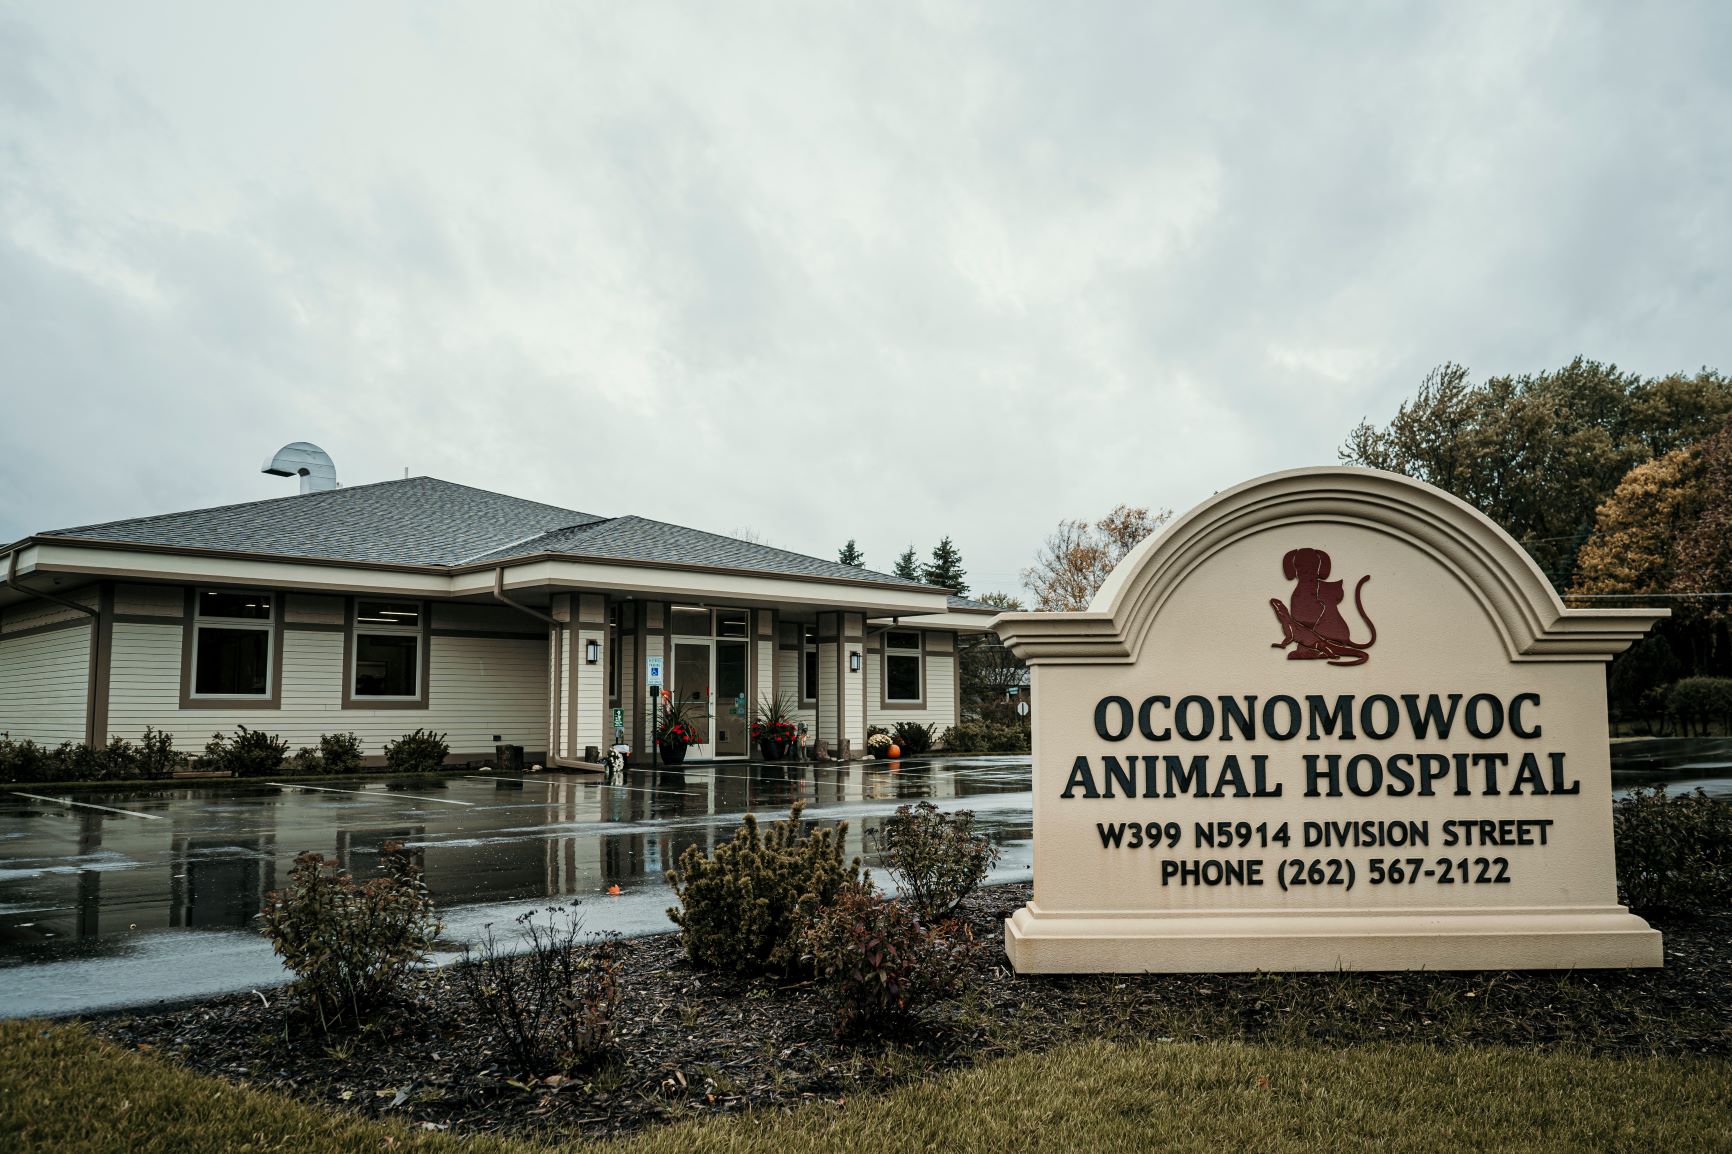 Exterior of Oconomowoc Animal Hospital in Oconomowoc, WI